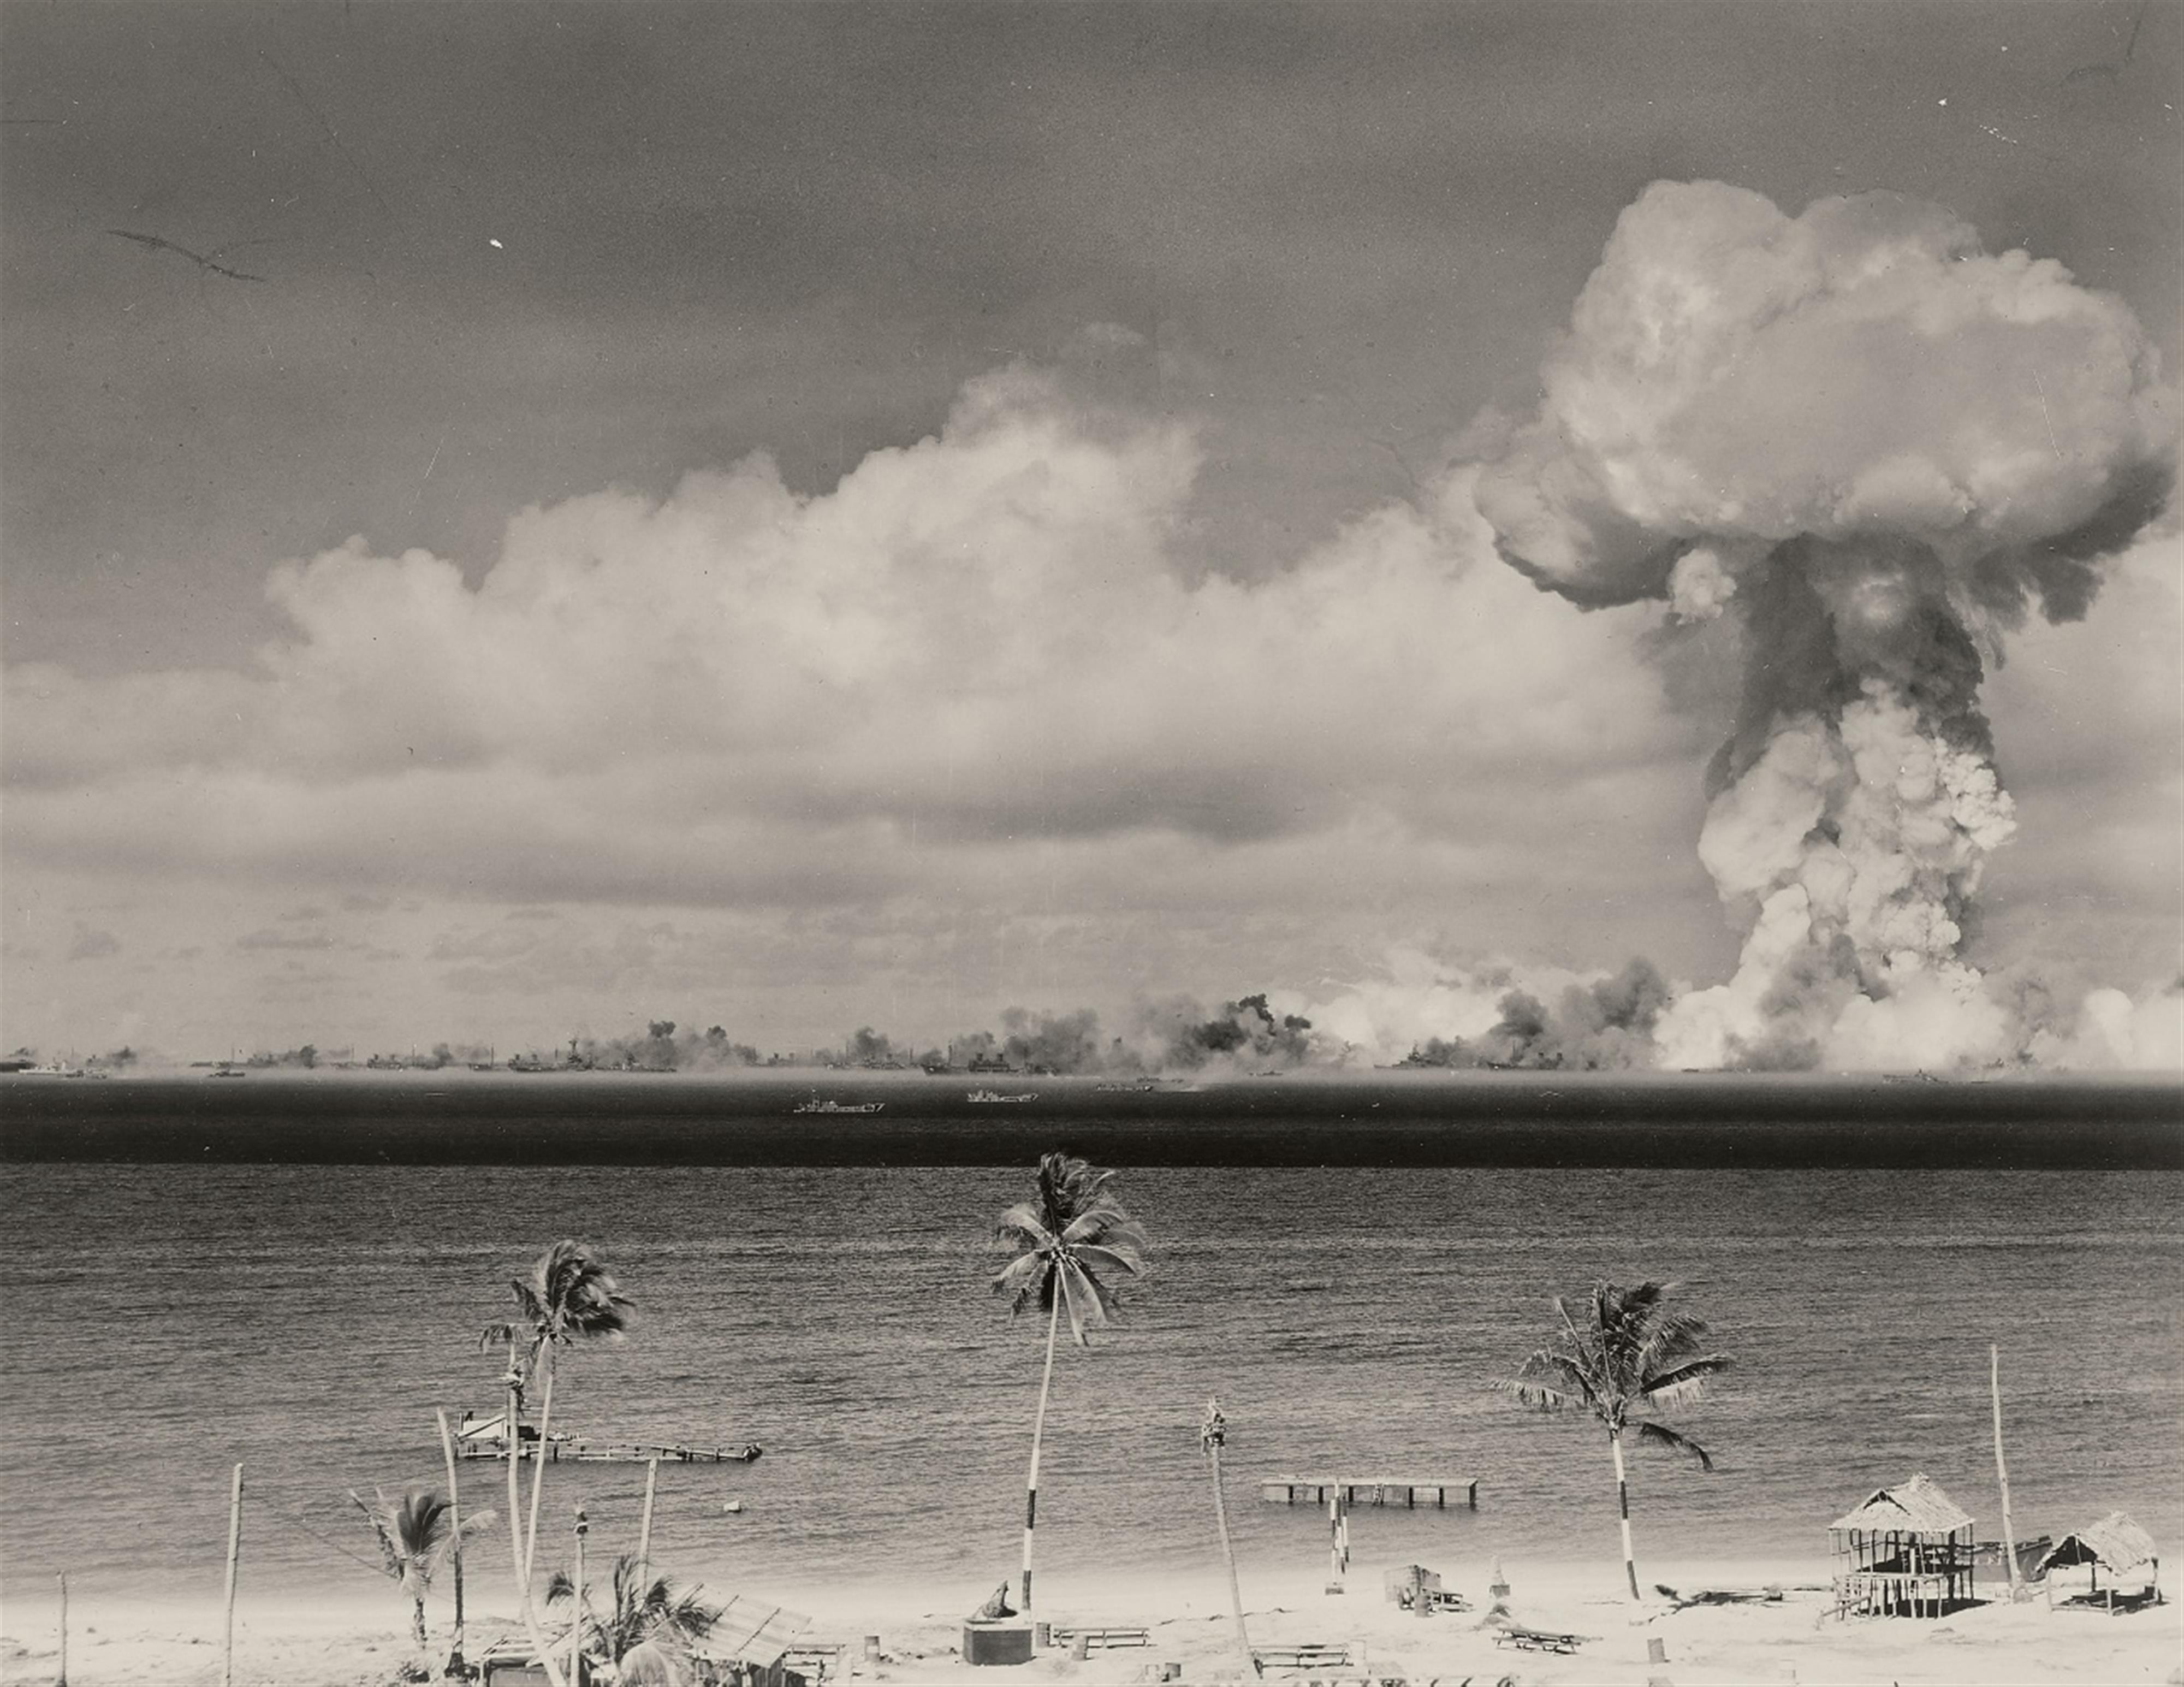 Joint Army Task Force One Photo - "Operation Crossroads" - Aufnahmen der Atombomben-Tests auf dem Bikini-Atoll - image-3